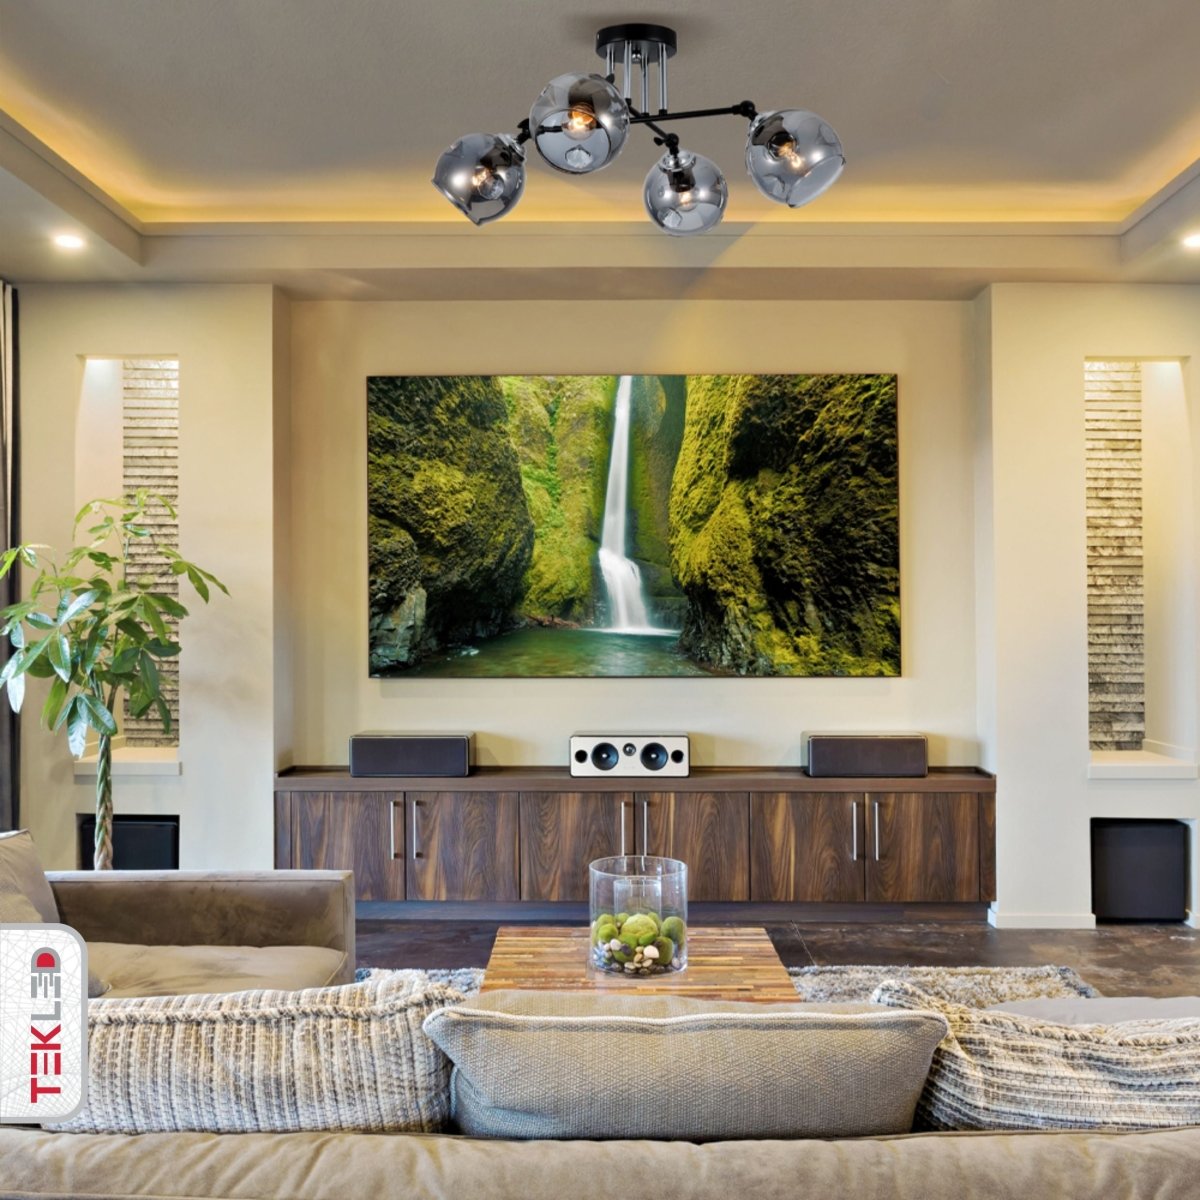 Smoky Glass Black And Chrome Semi Flush Ceiling Light 4Xe27 in indoor setting living room lobby